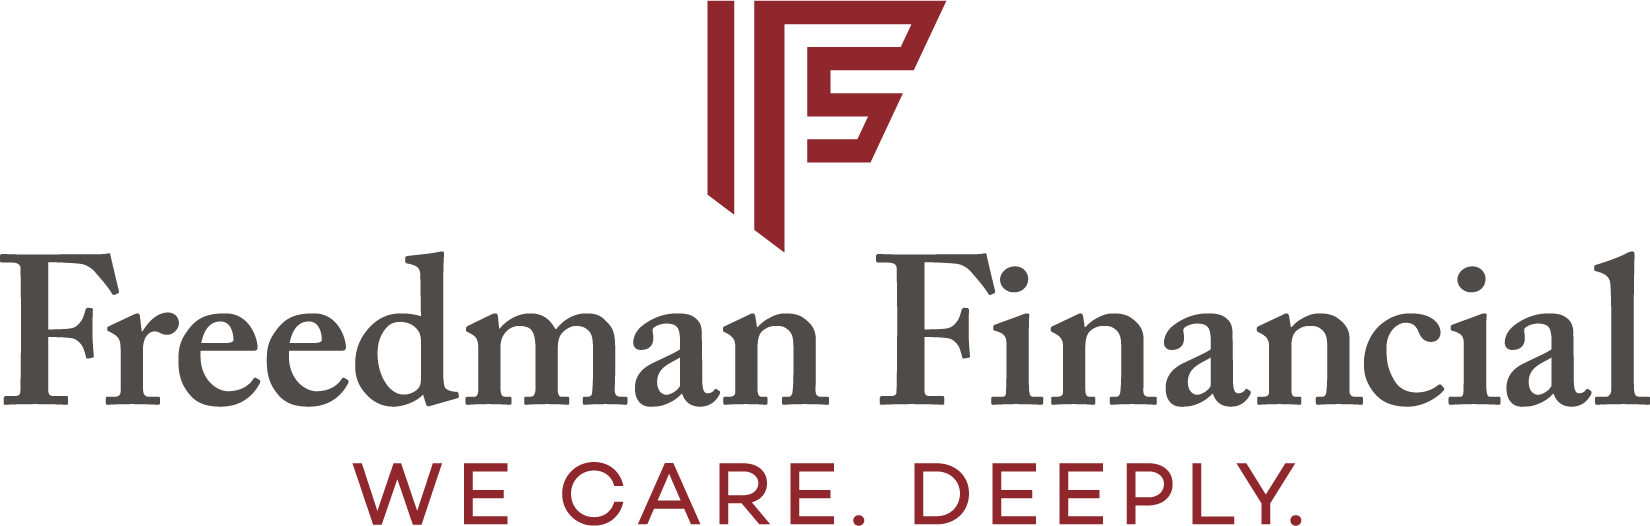 FreedmanFinancial Logo